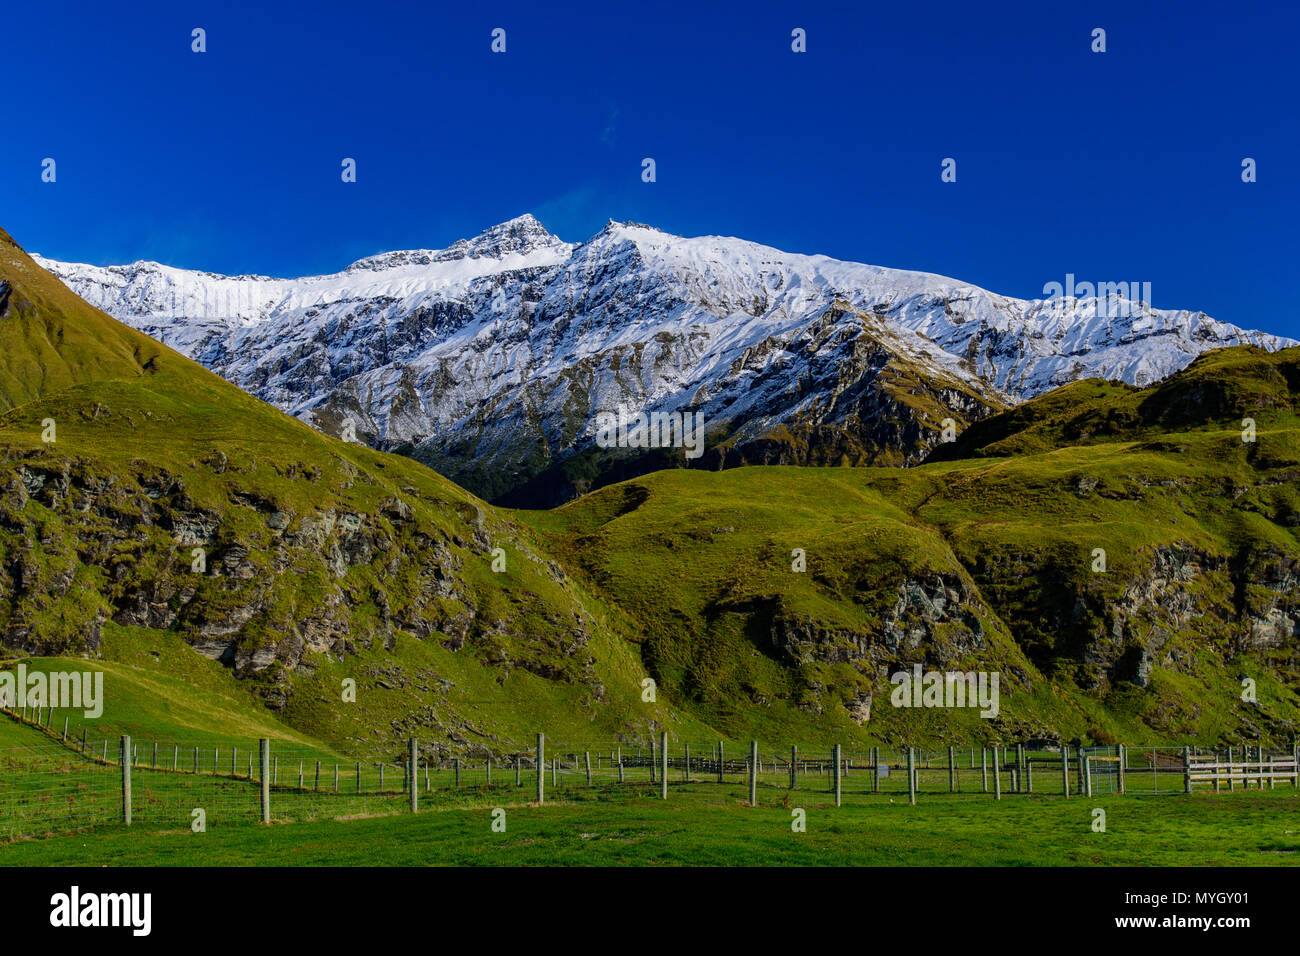 Snow mountains and natural views in Matukituki Valley area, Mount Aspiring National Park, South Island, New Zealand Stock Photo